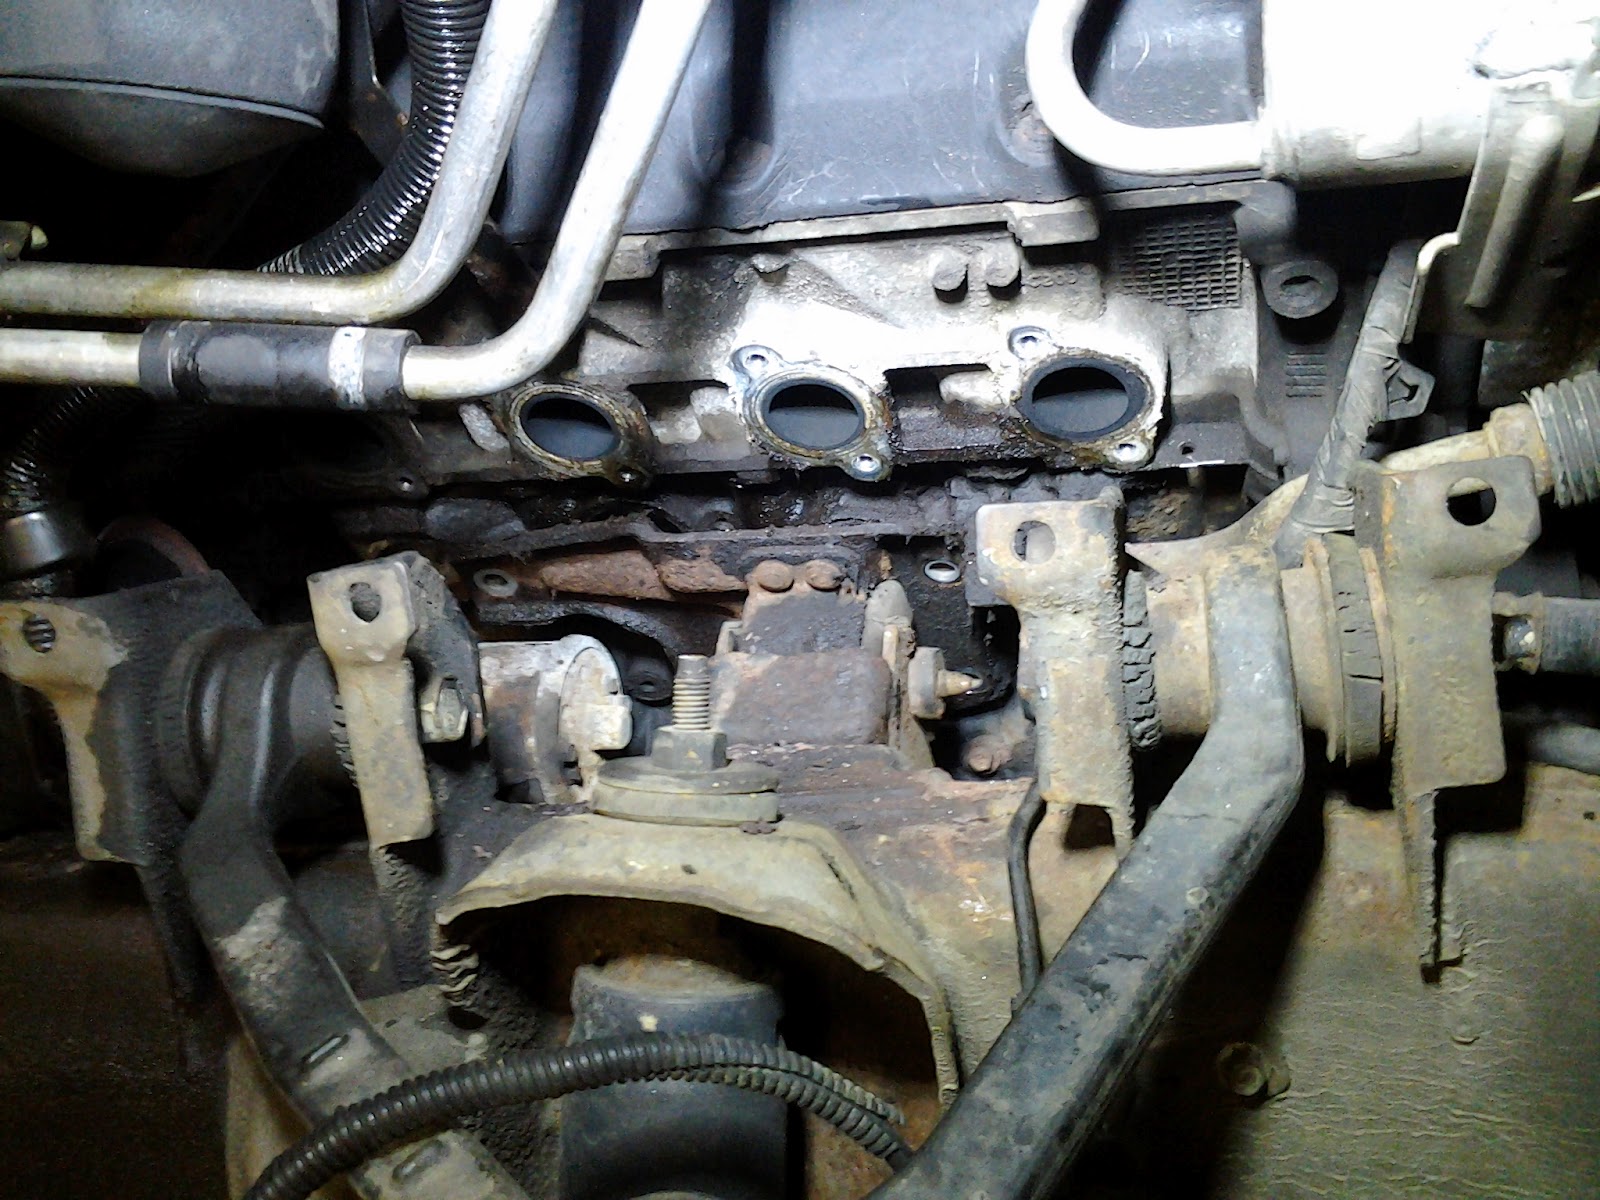 1999 Ford f150 exhaust manifold leak #1